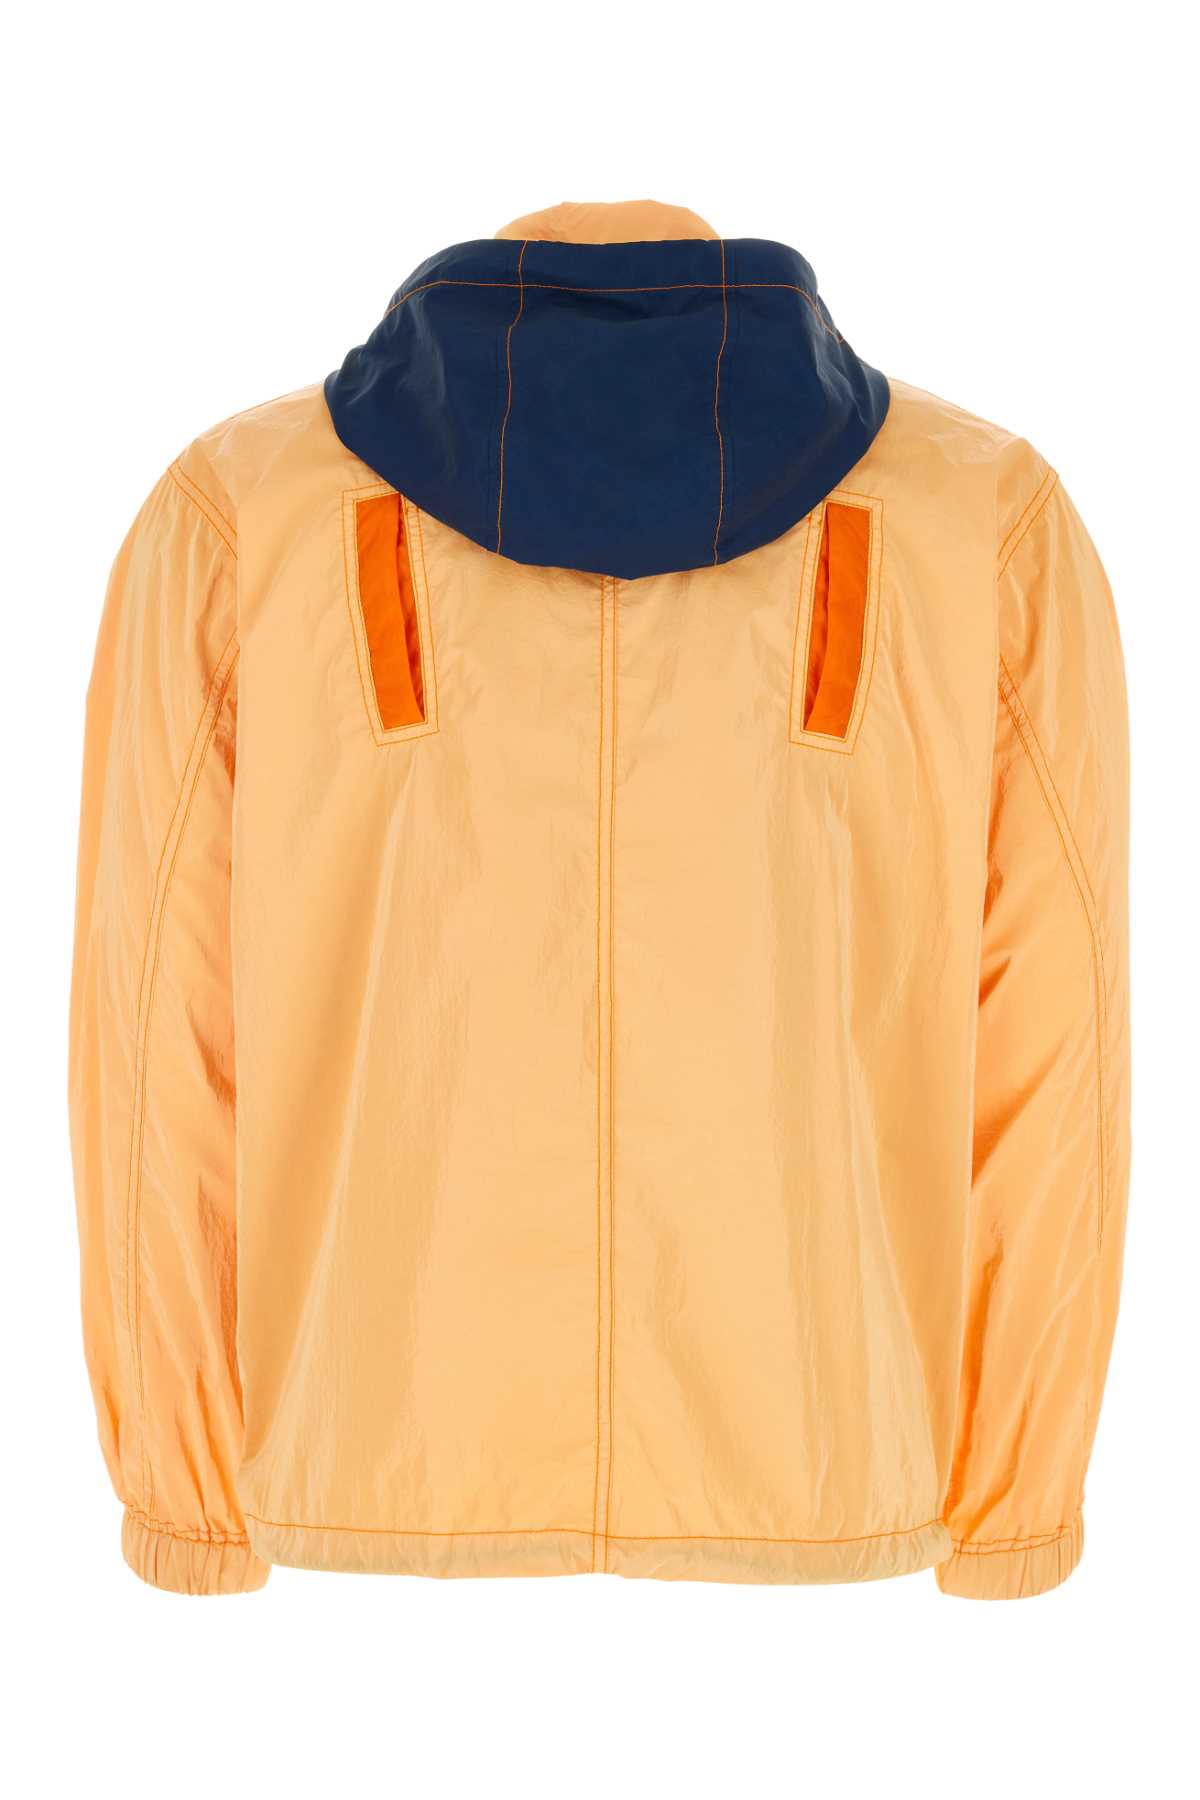 Stone Island Light Orange Nylon Ripstop Jacket In V0032